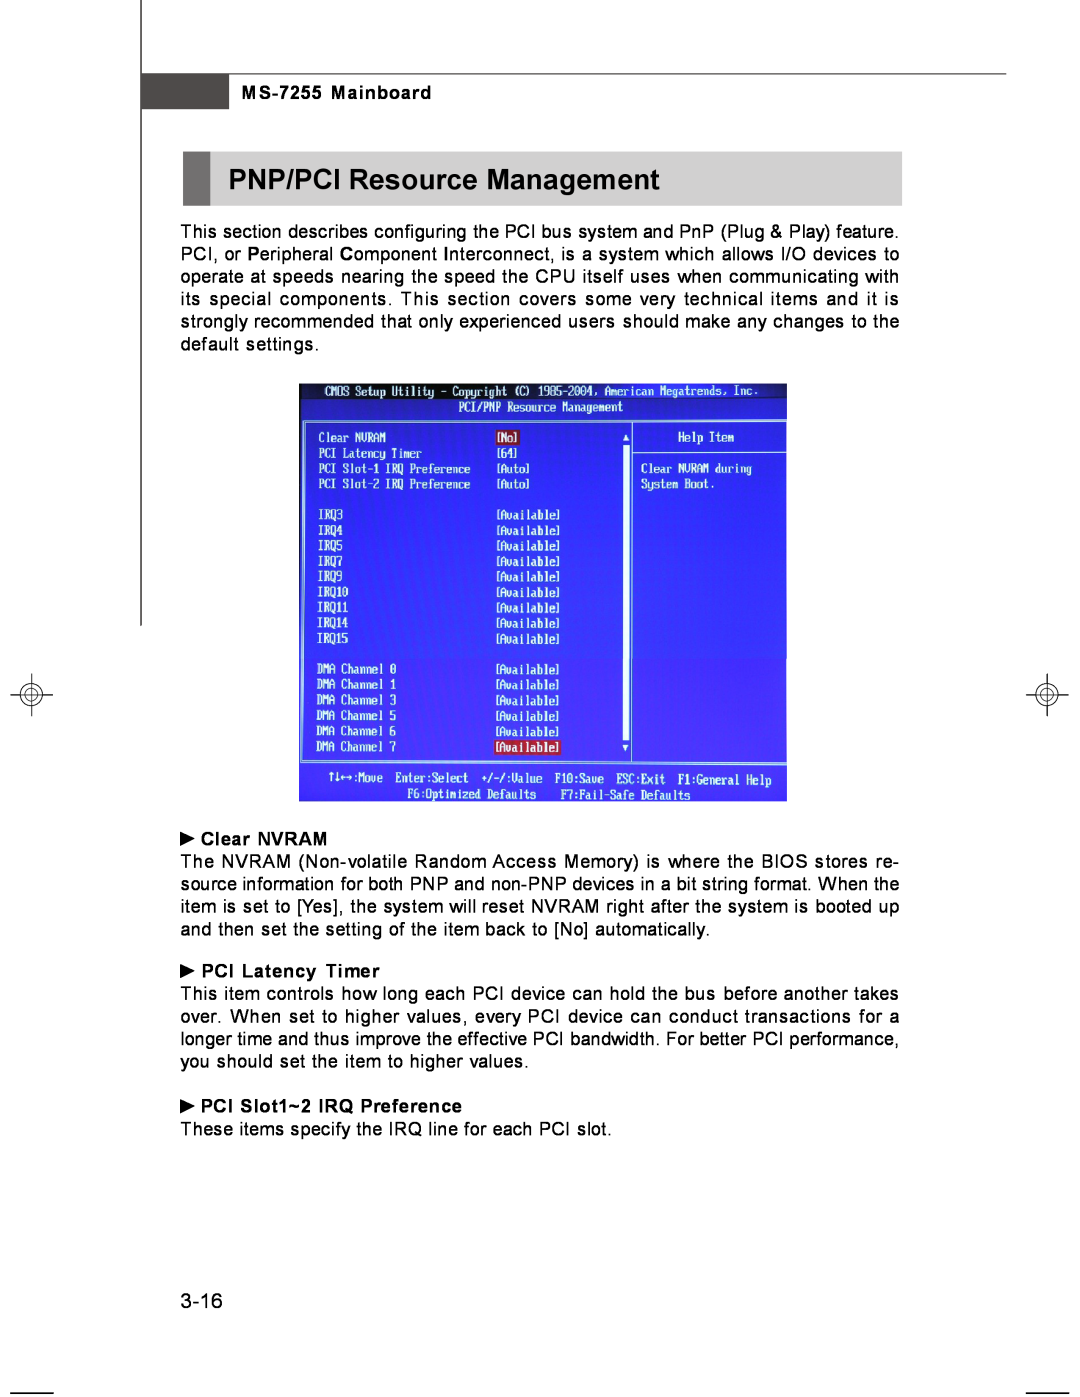 MSI MS-7255 manual PNP/PCI Resource Management, 3-16, Clear NVRAM, PCI Latency Timer, PCI Slot1~2 IRQ Preference 